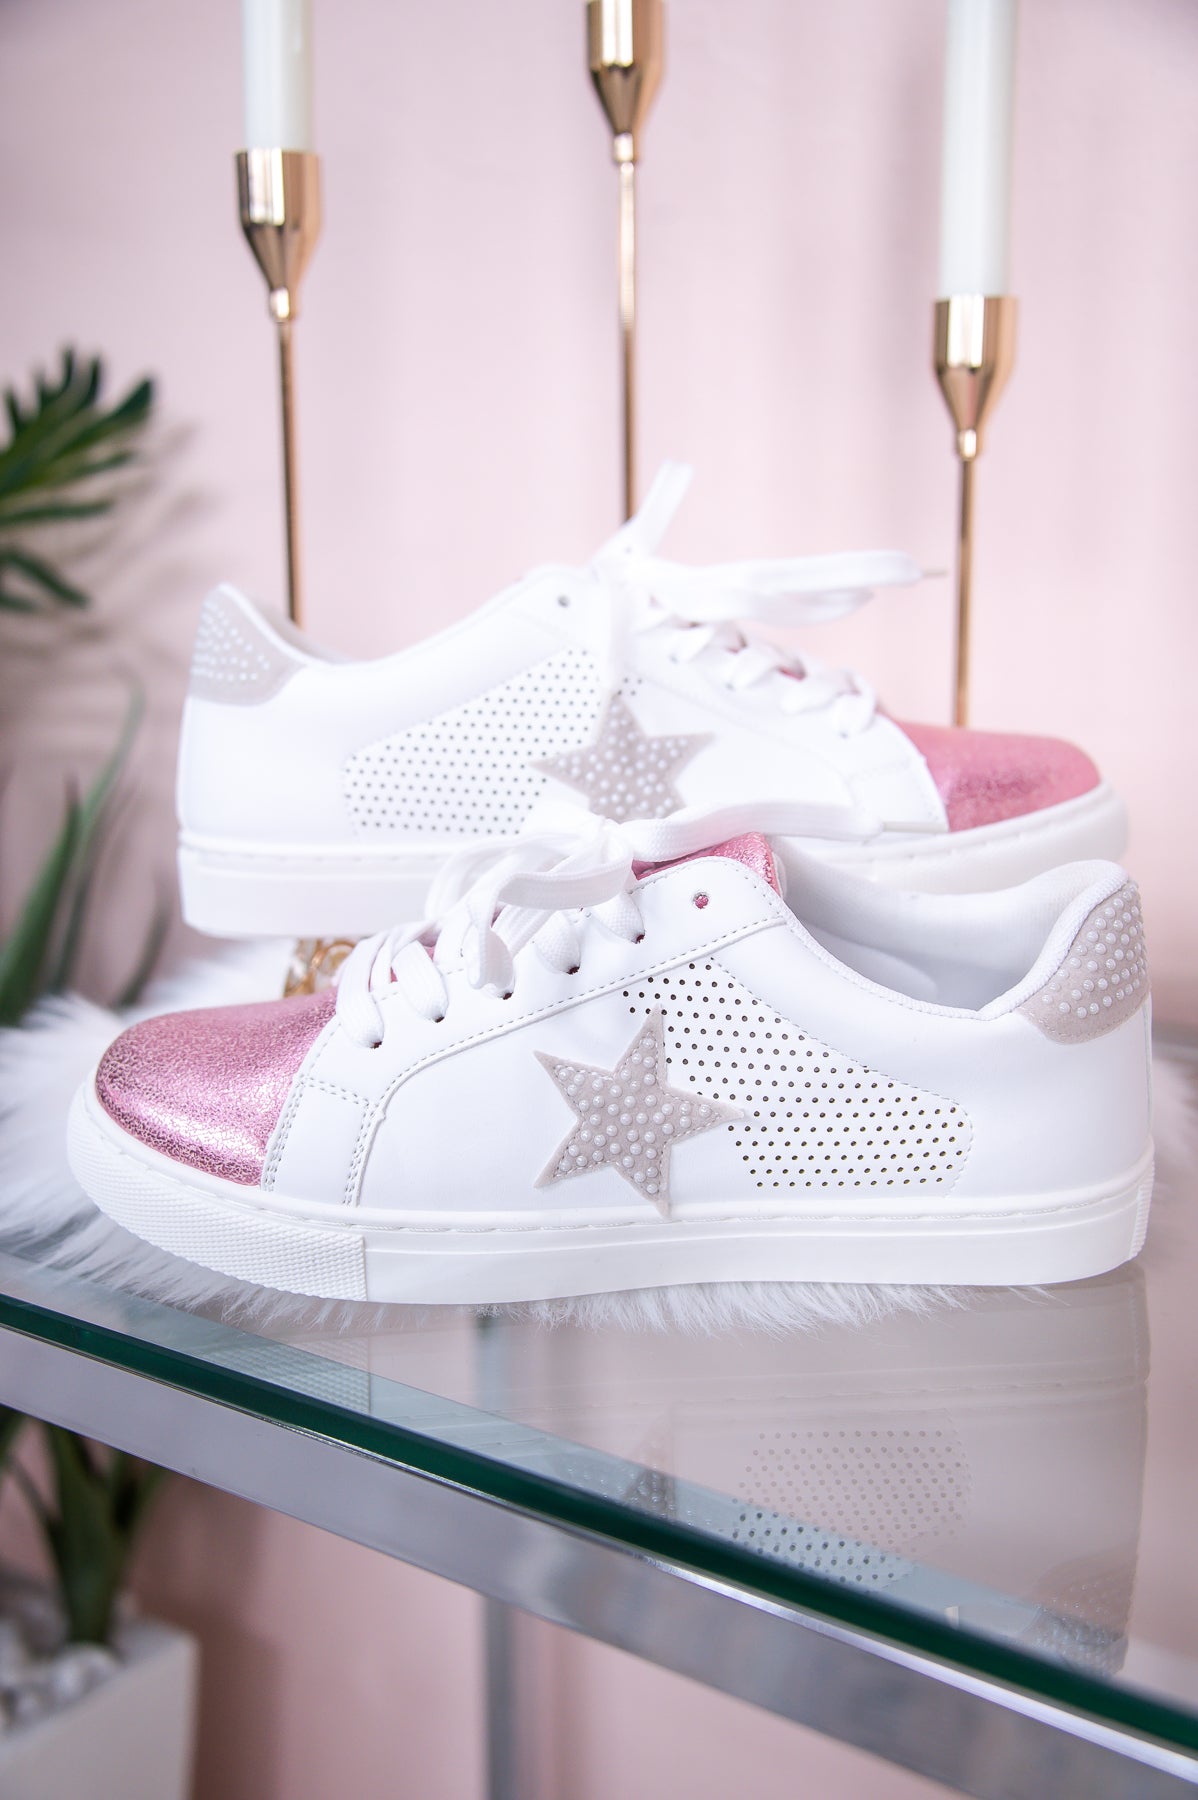 Sole Searching Light Pink/Off White Metallic/Star Sneakers - SHO2610LPK